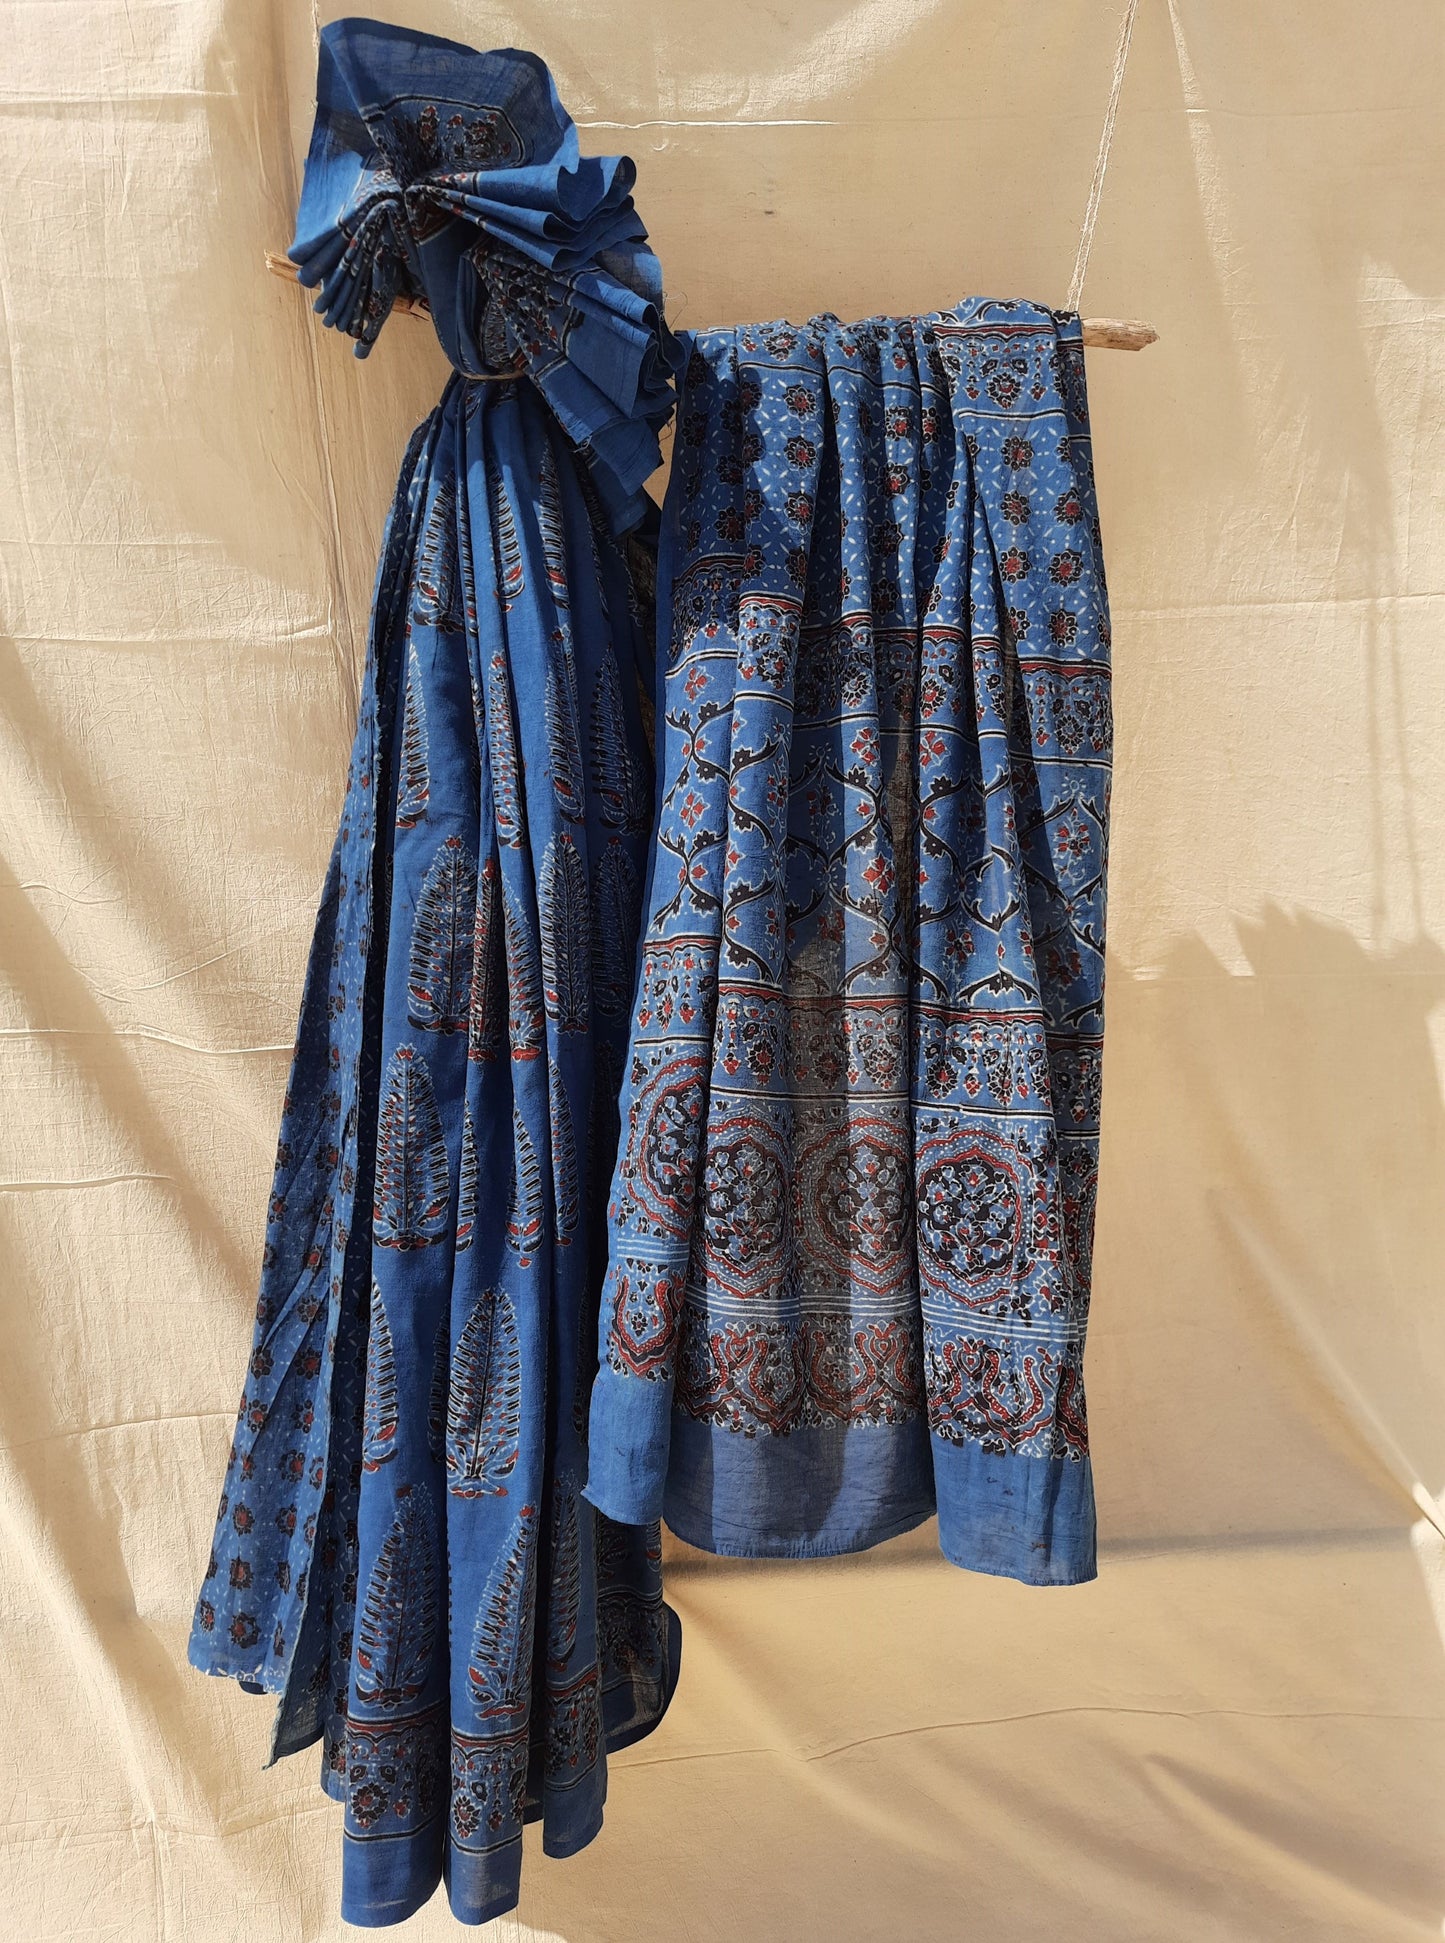 Indigo ajrakh saree, Ajrakh hand block print cotton saree in indigo color, Cotton ajrakh saree